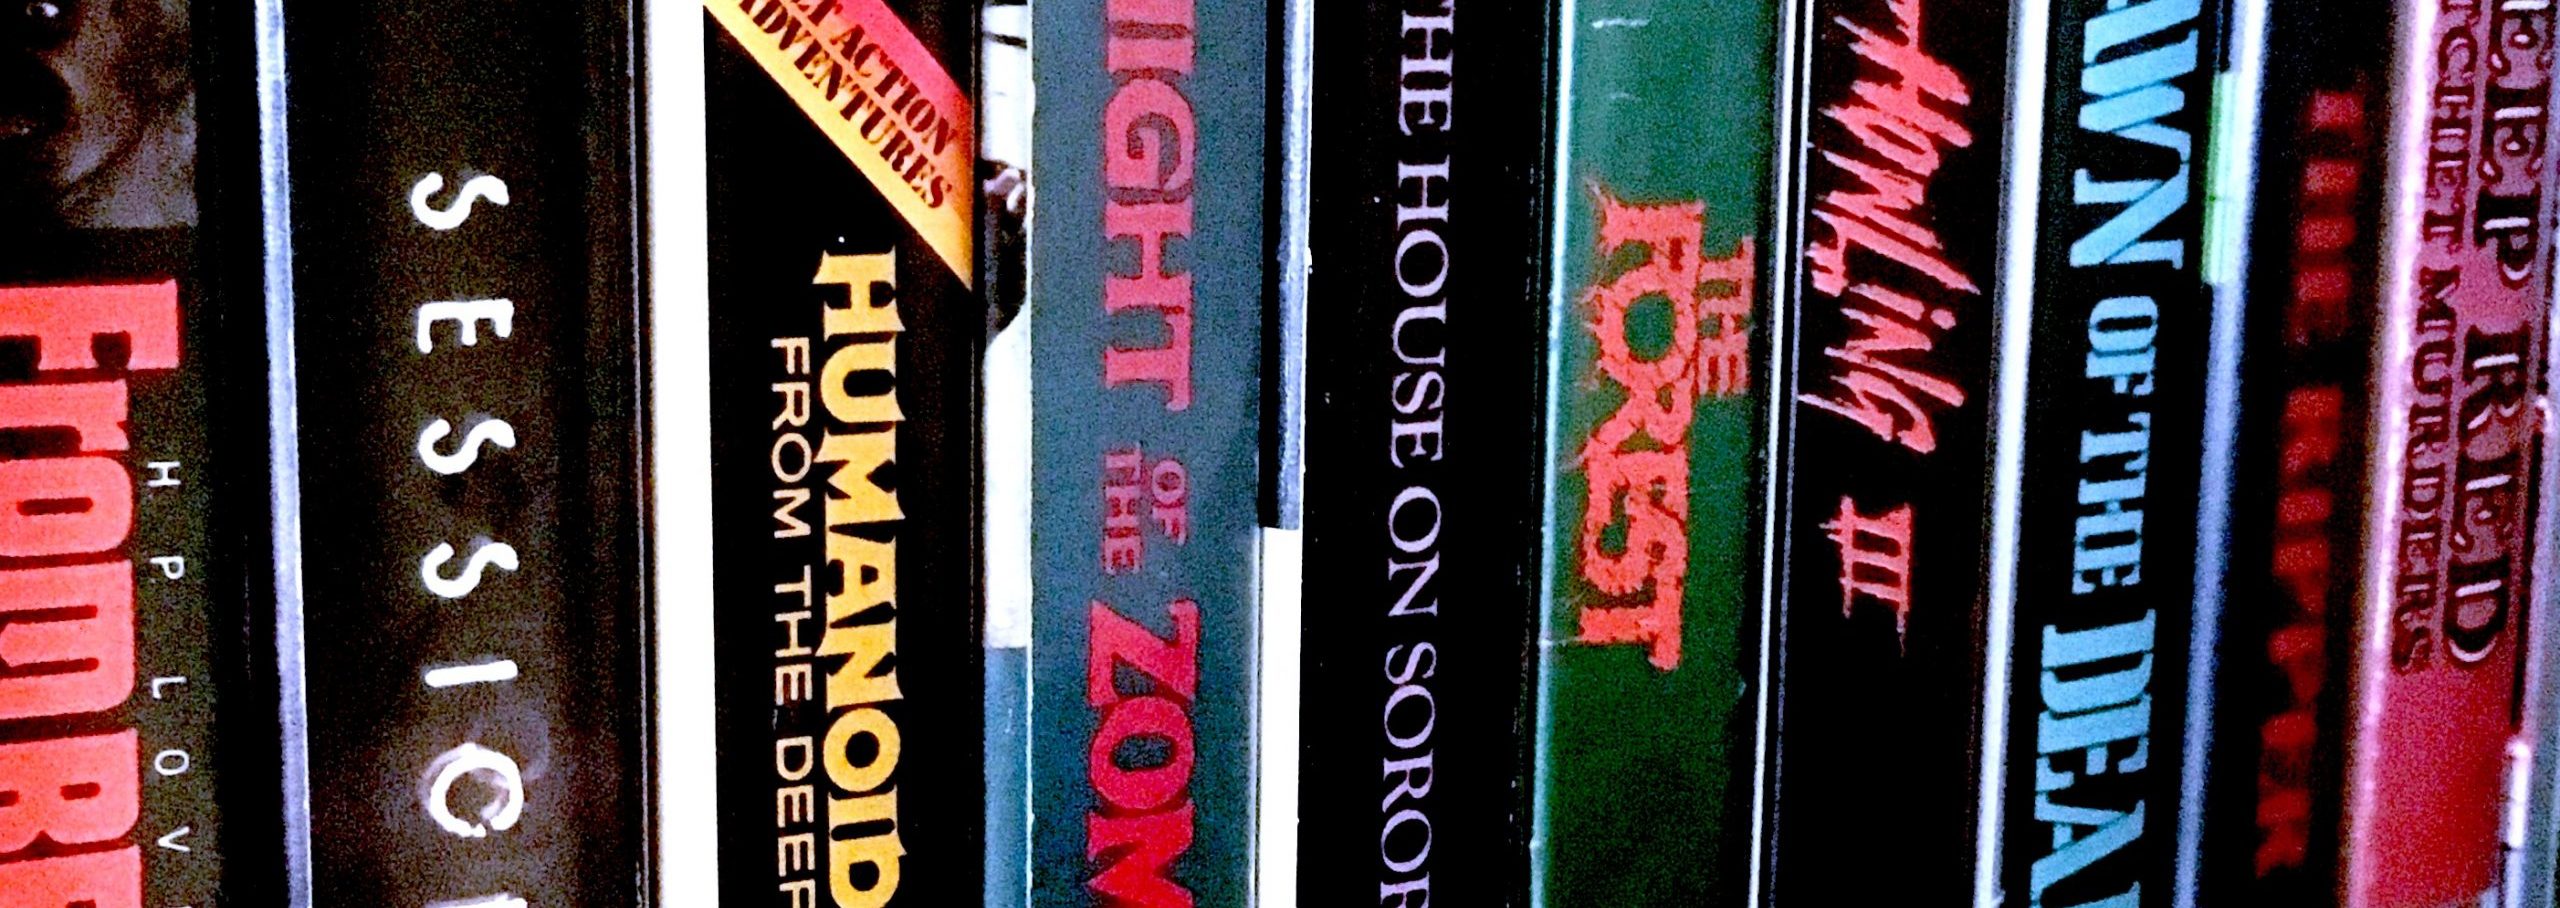 Row of VHS horror